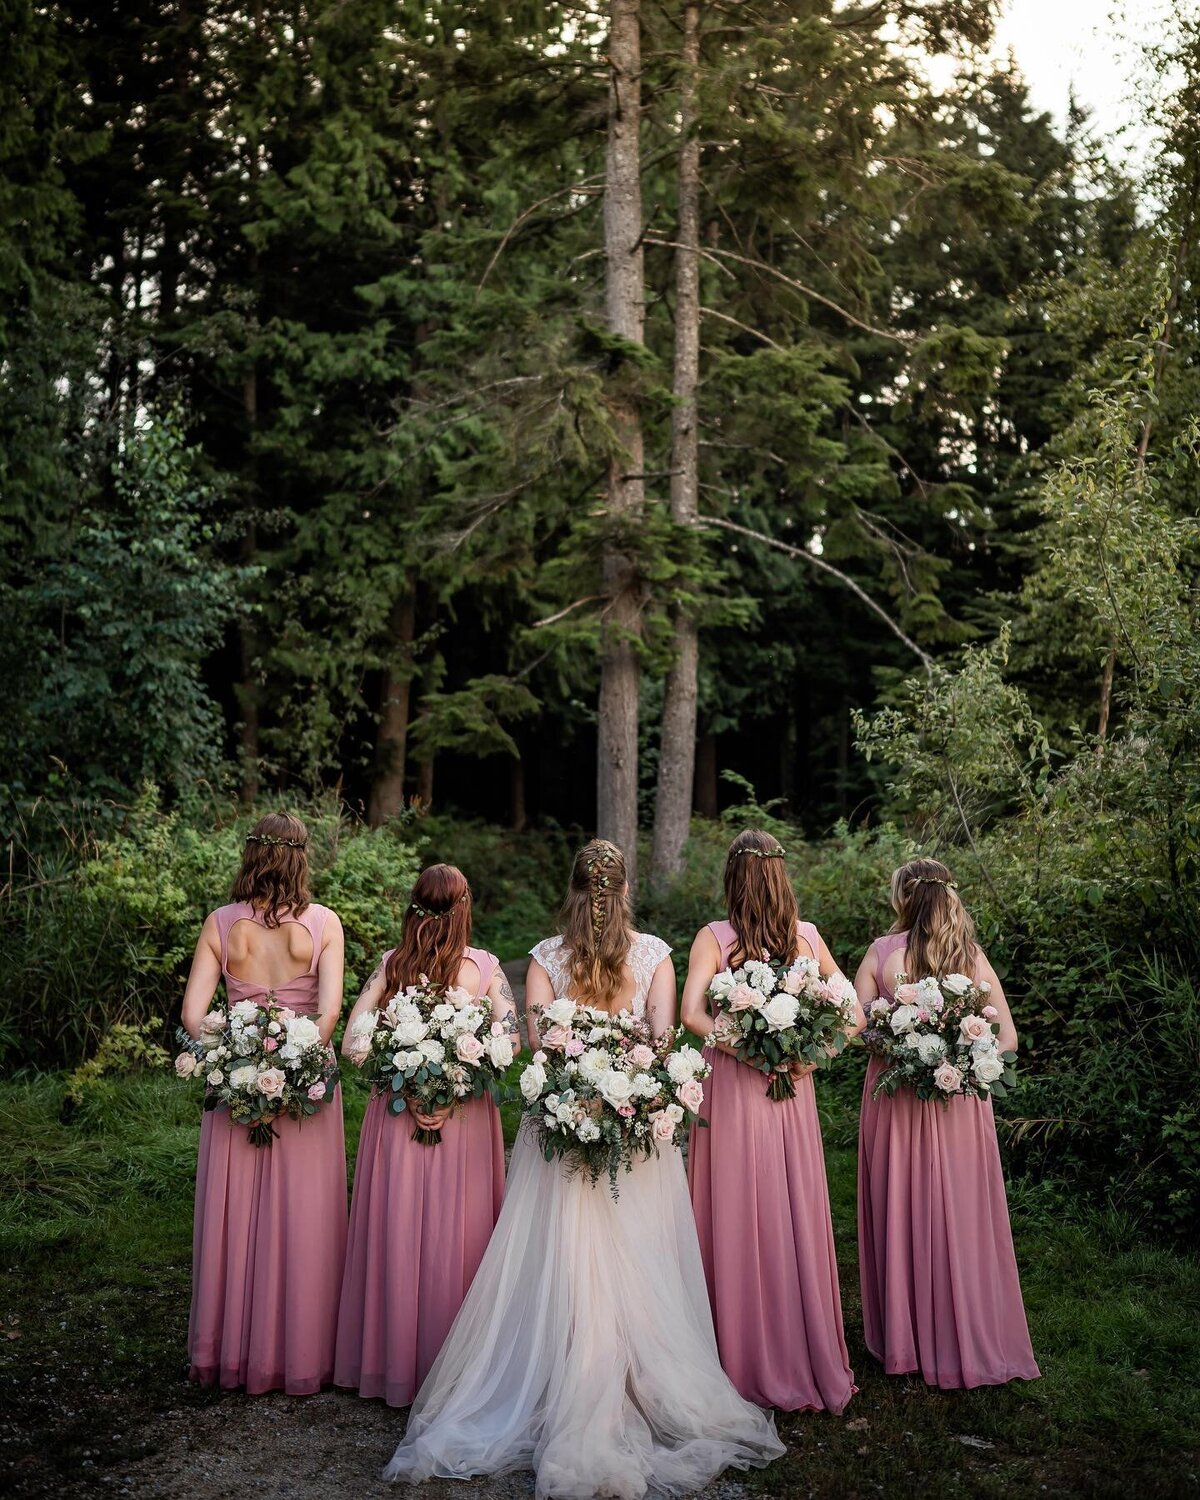 BKC4U WEDDING FLOWERS bride and bridesmaids blush and ivory bkc4u signature bouquets